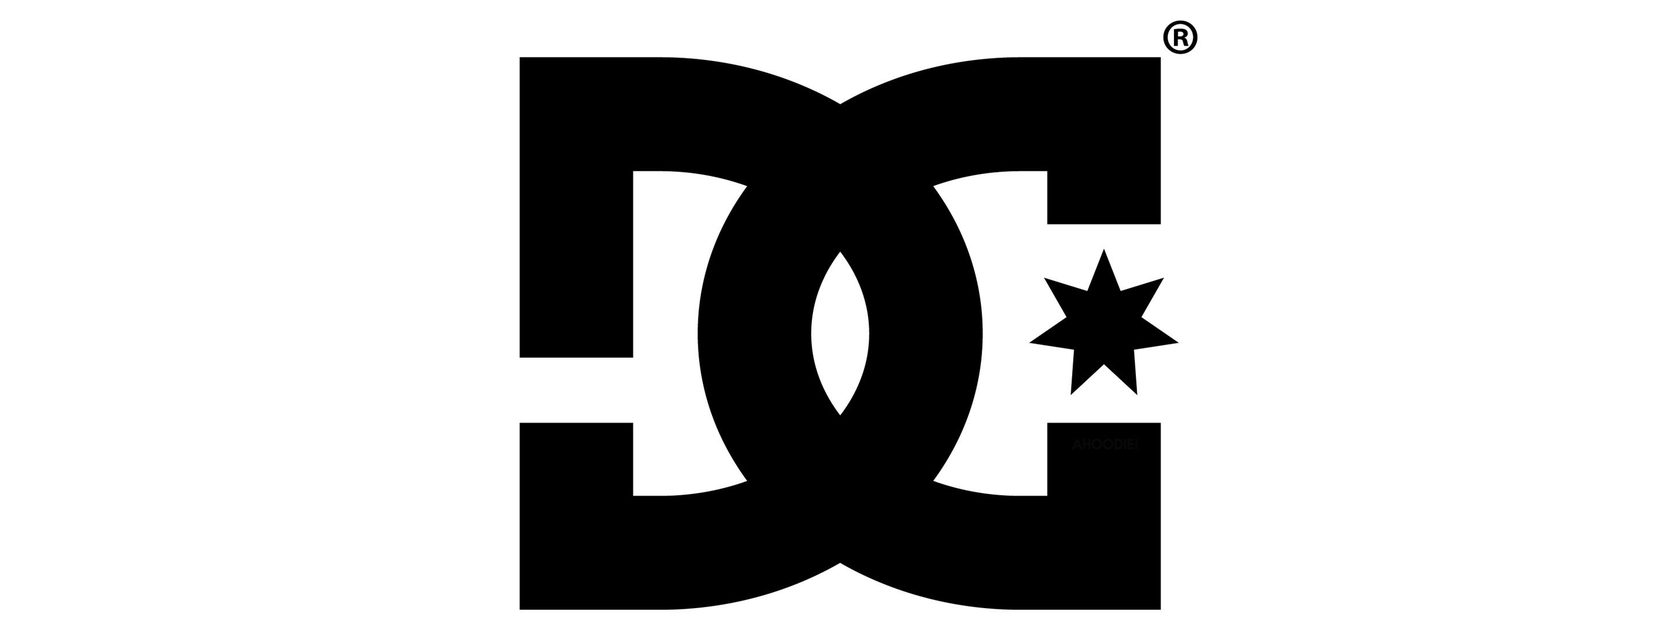 Логотип DC Shoes (Диси Шуз)